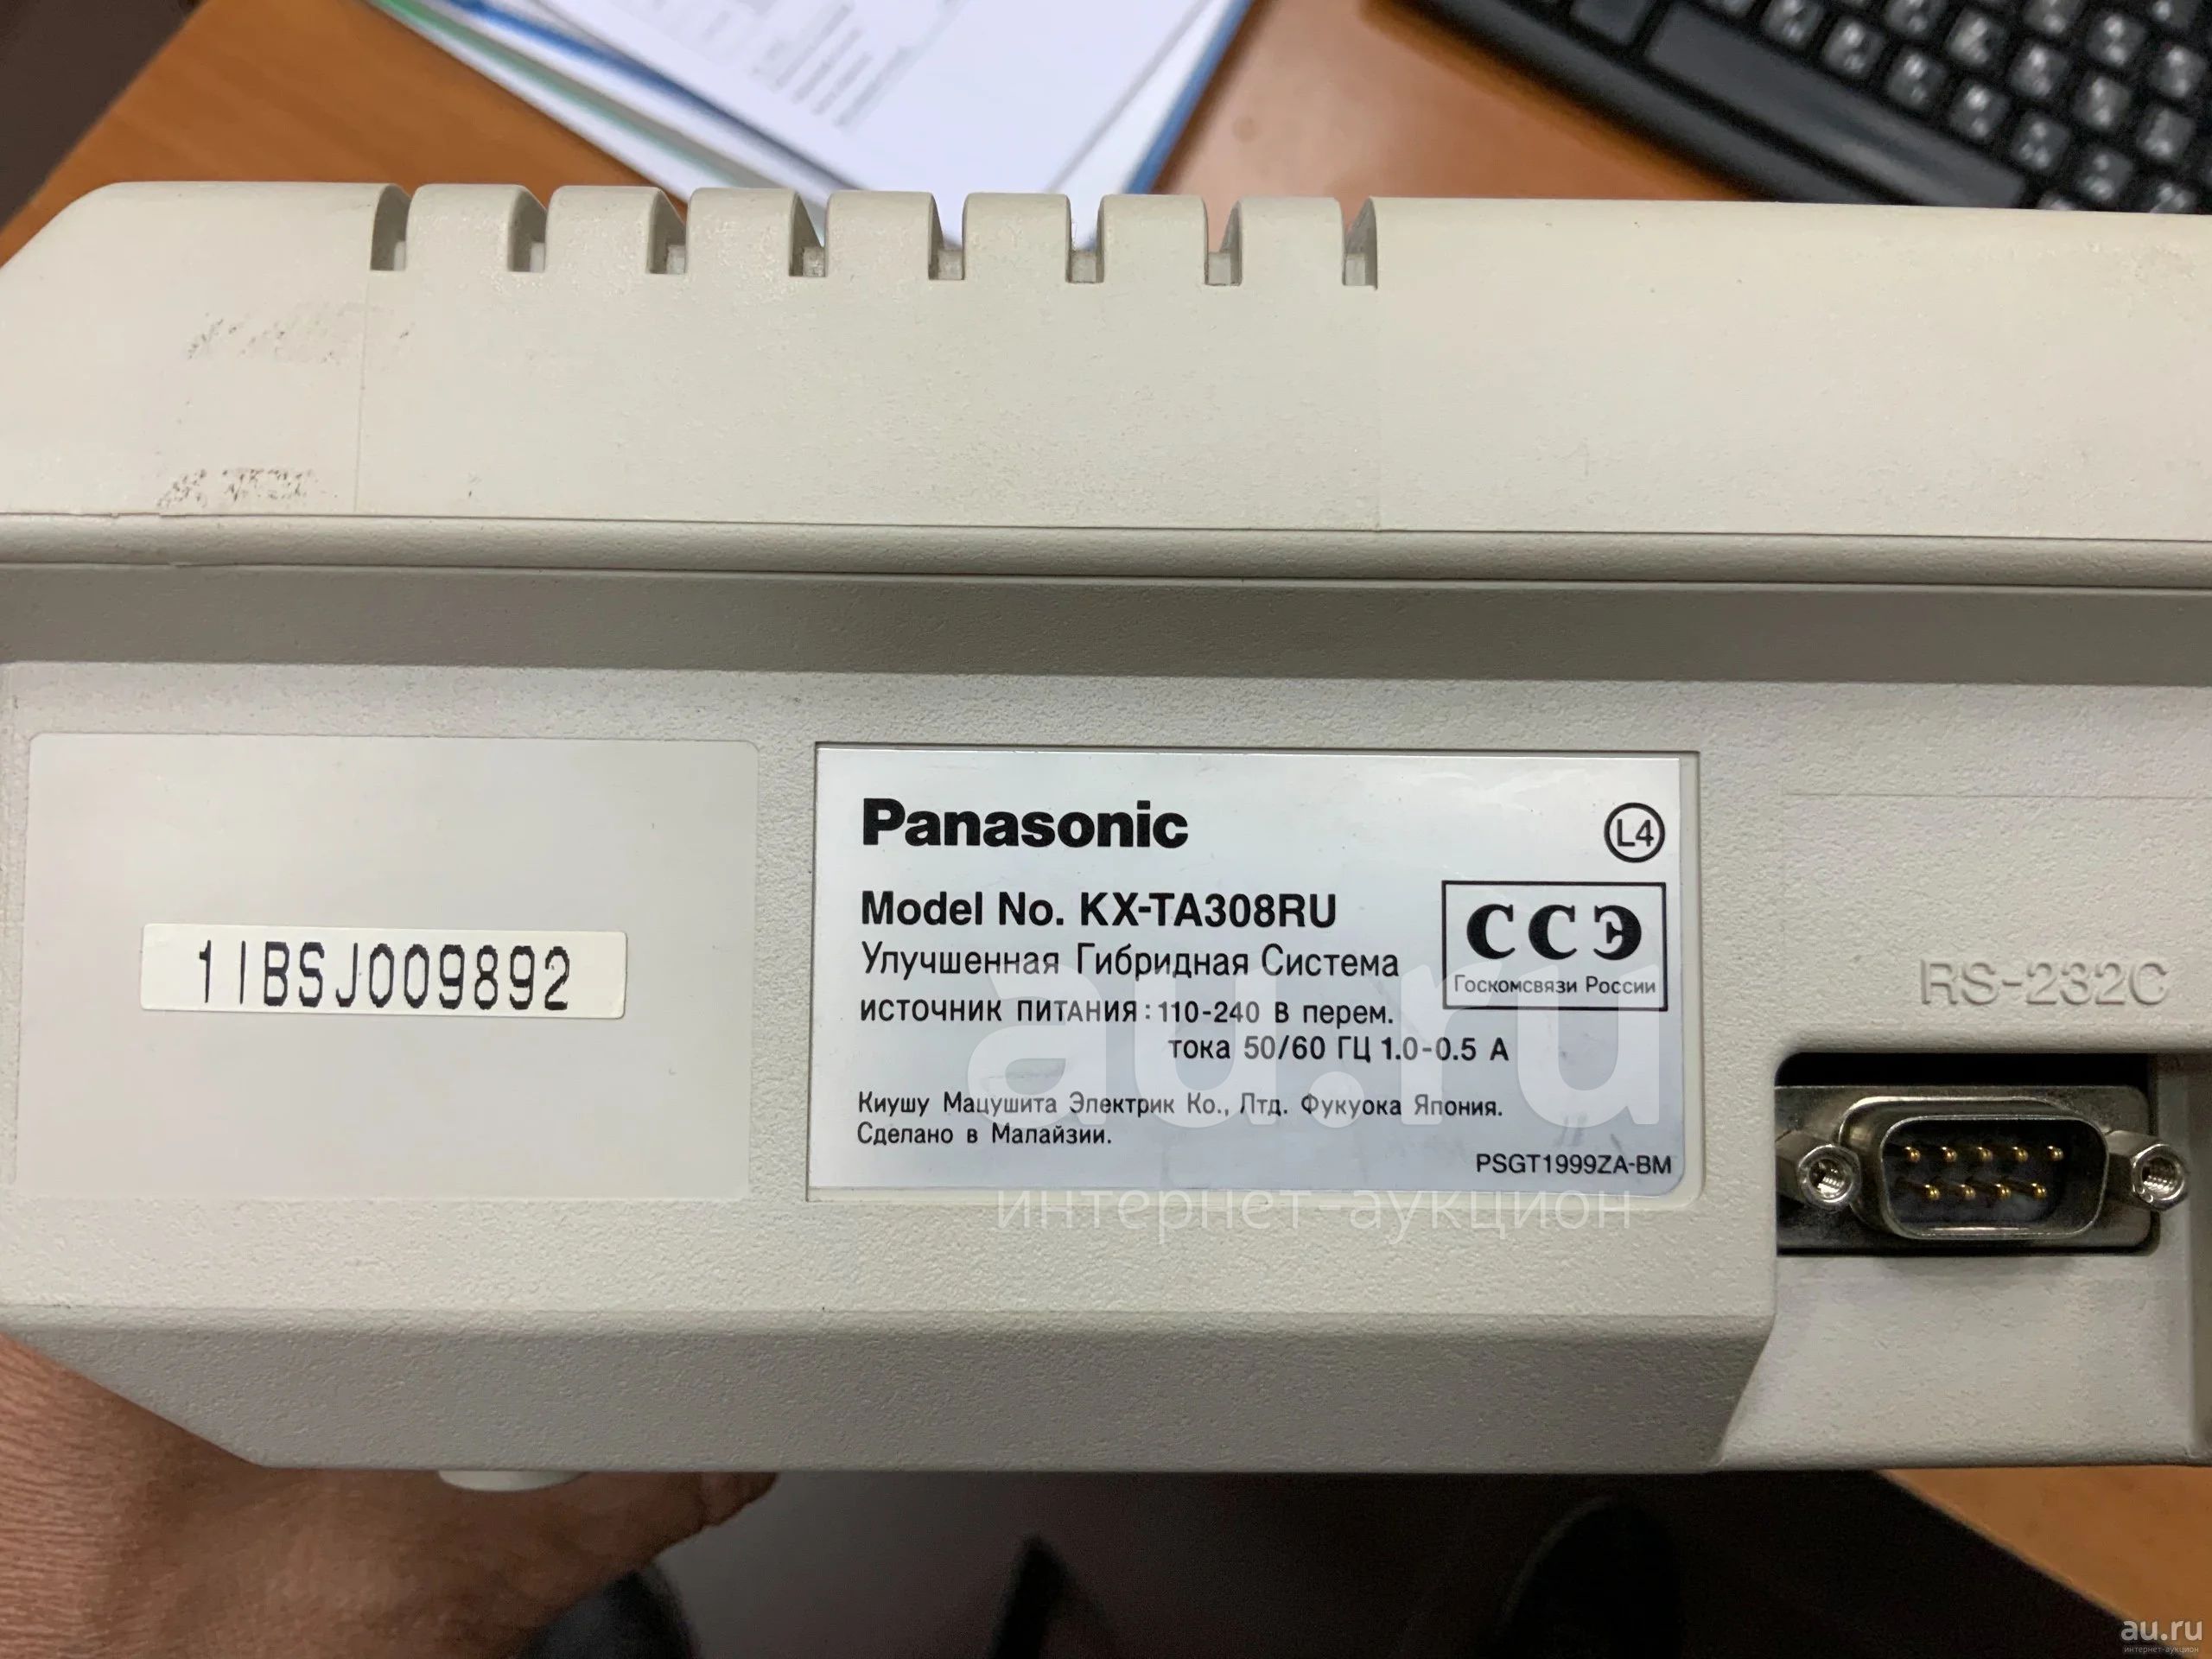 Panasonic KX-ta308. Мини АТС Panasonic KX-ta308. Panasonic 308 АТС. Программатор АТС Panasonic KX-ta 308. Атсом ru